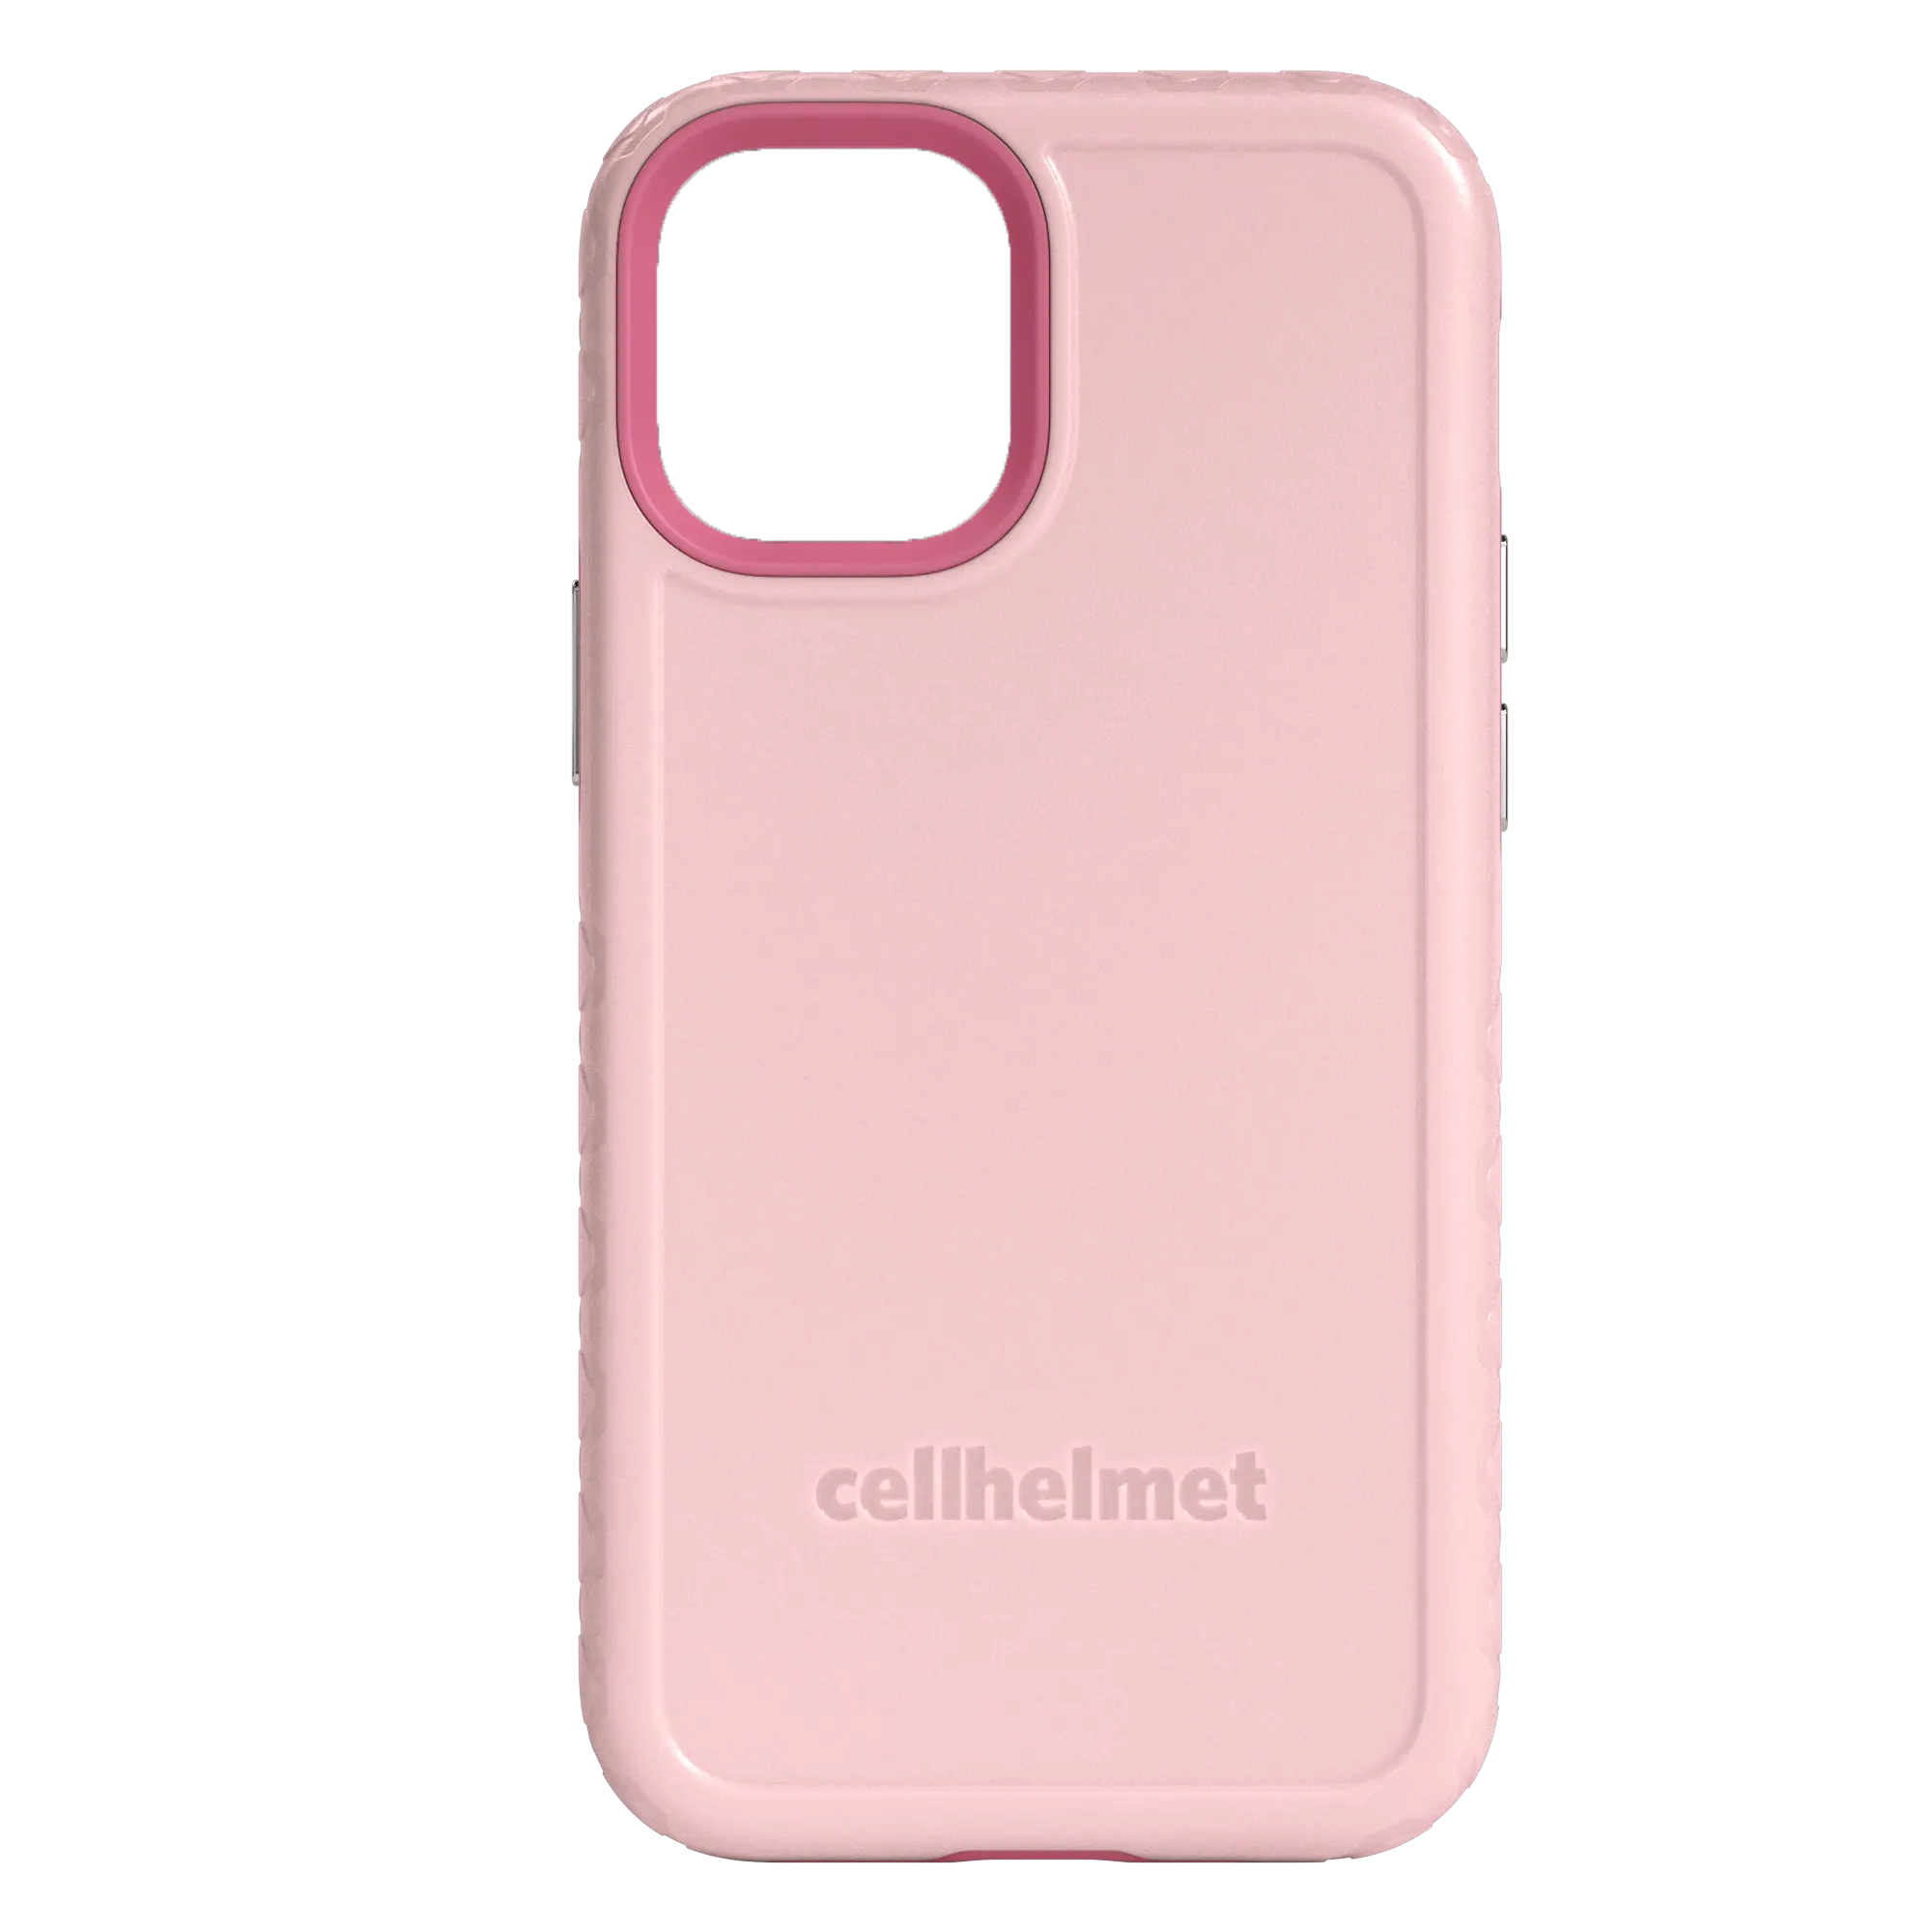 Pink cellhelmet Customizable Case for iPhone 12 Mini